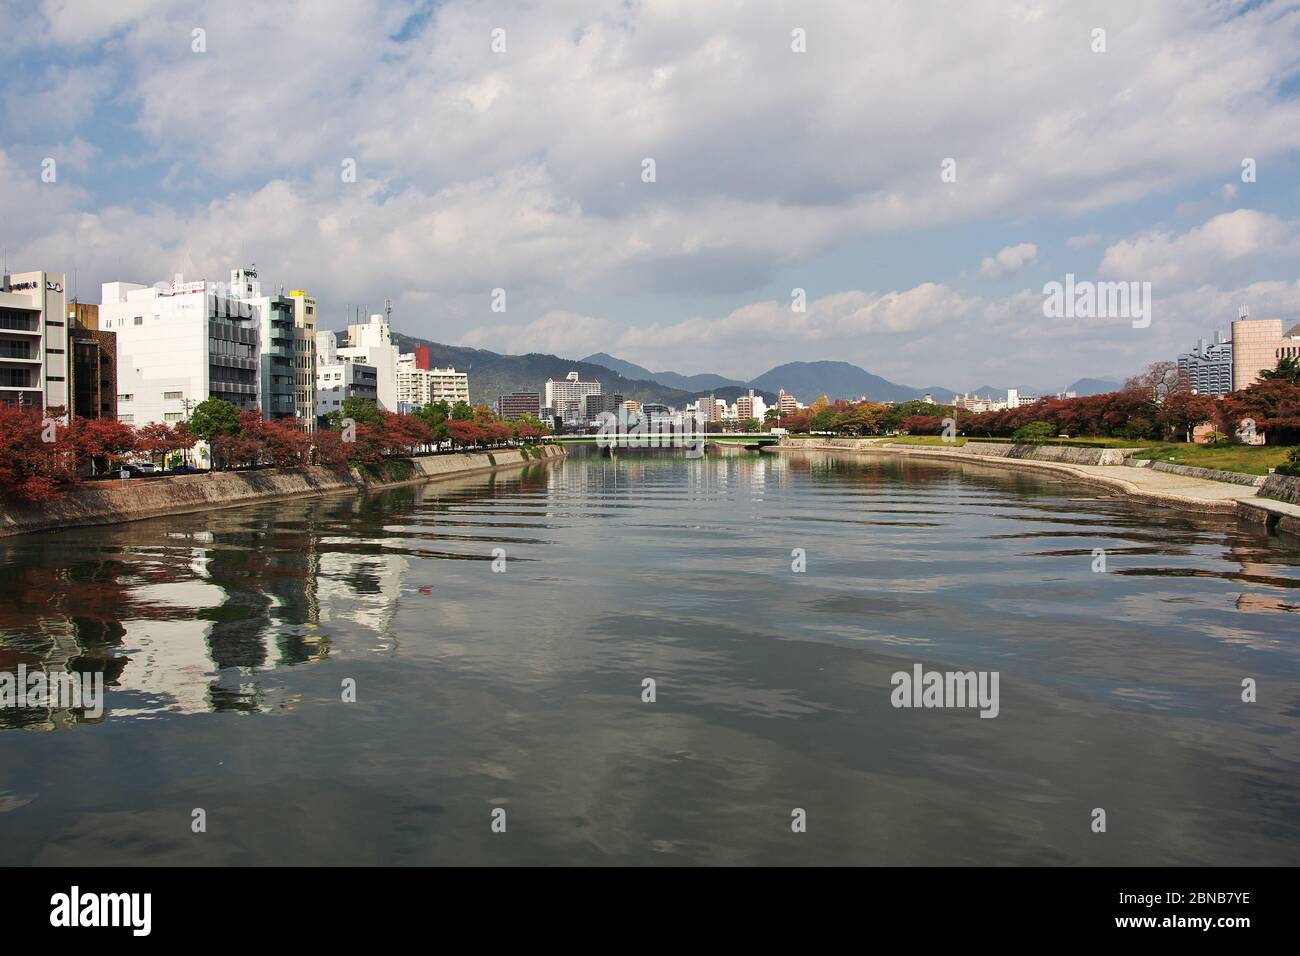 The river in Hiroshima, Japan Stock Photo